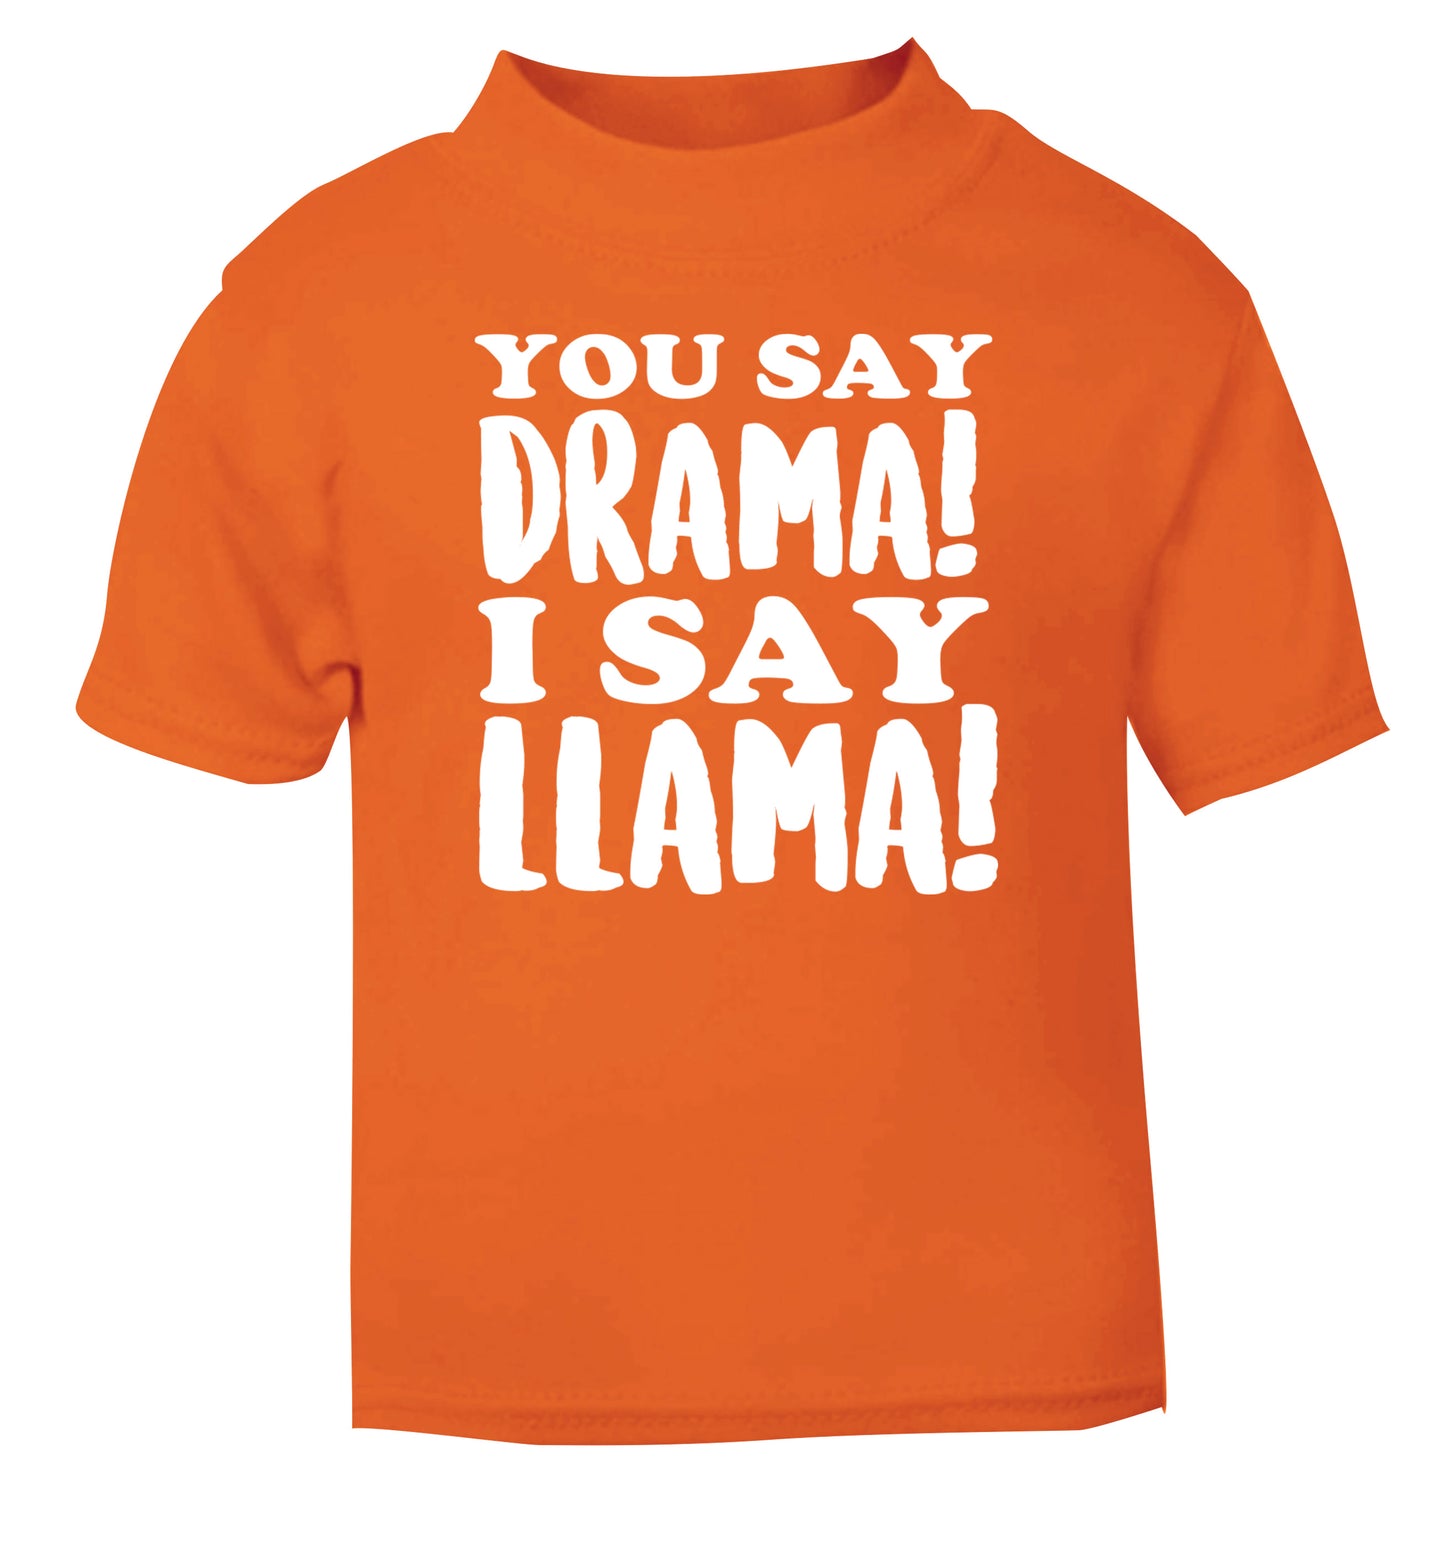 You say drama I say llama! orange Baby Toddler Tshirt 2 Years